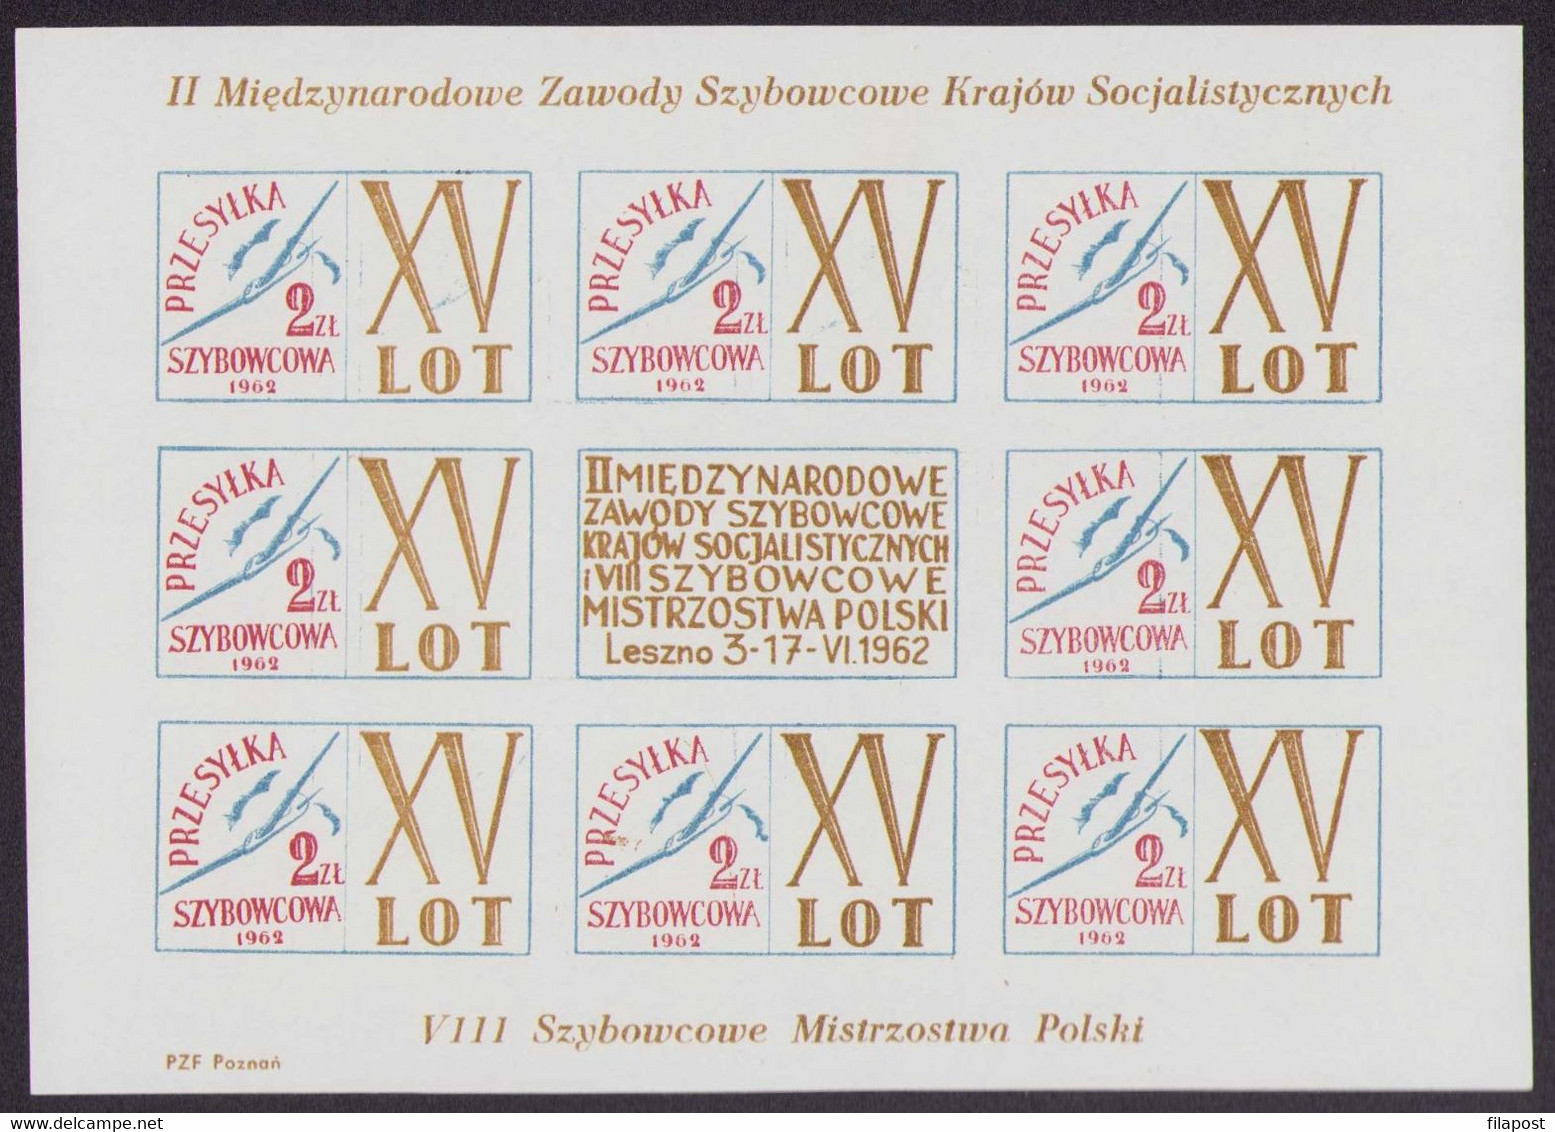 POLAND 1962 Interational & Polish Gliding Championships / Socialist Countries, LOT, Airplane, Plane, Full Sheet MNH**P71 - Hojas Completas